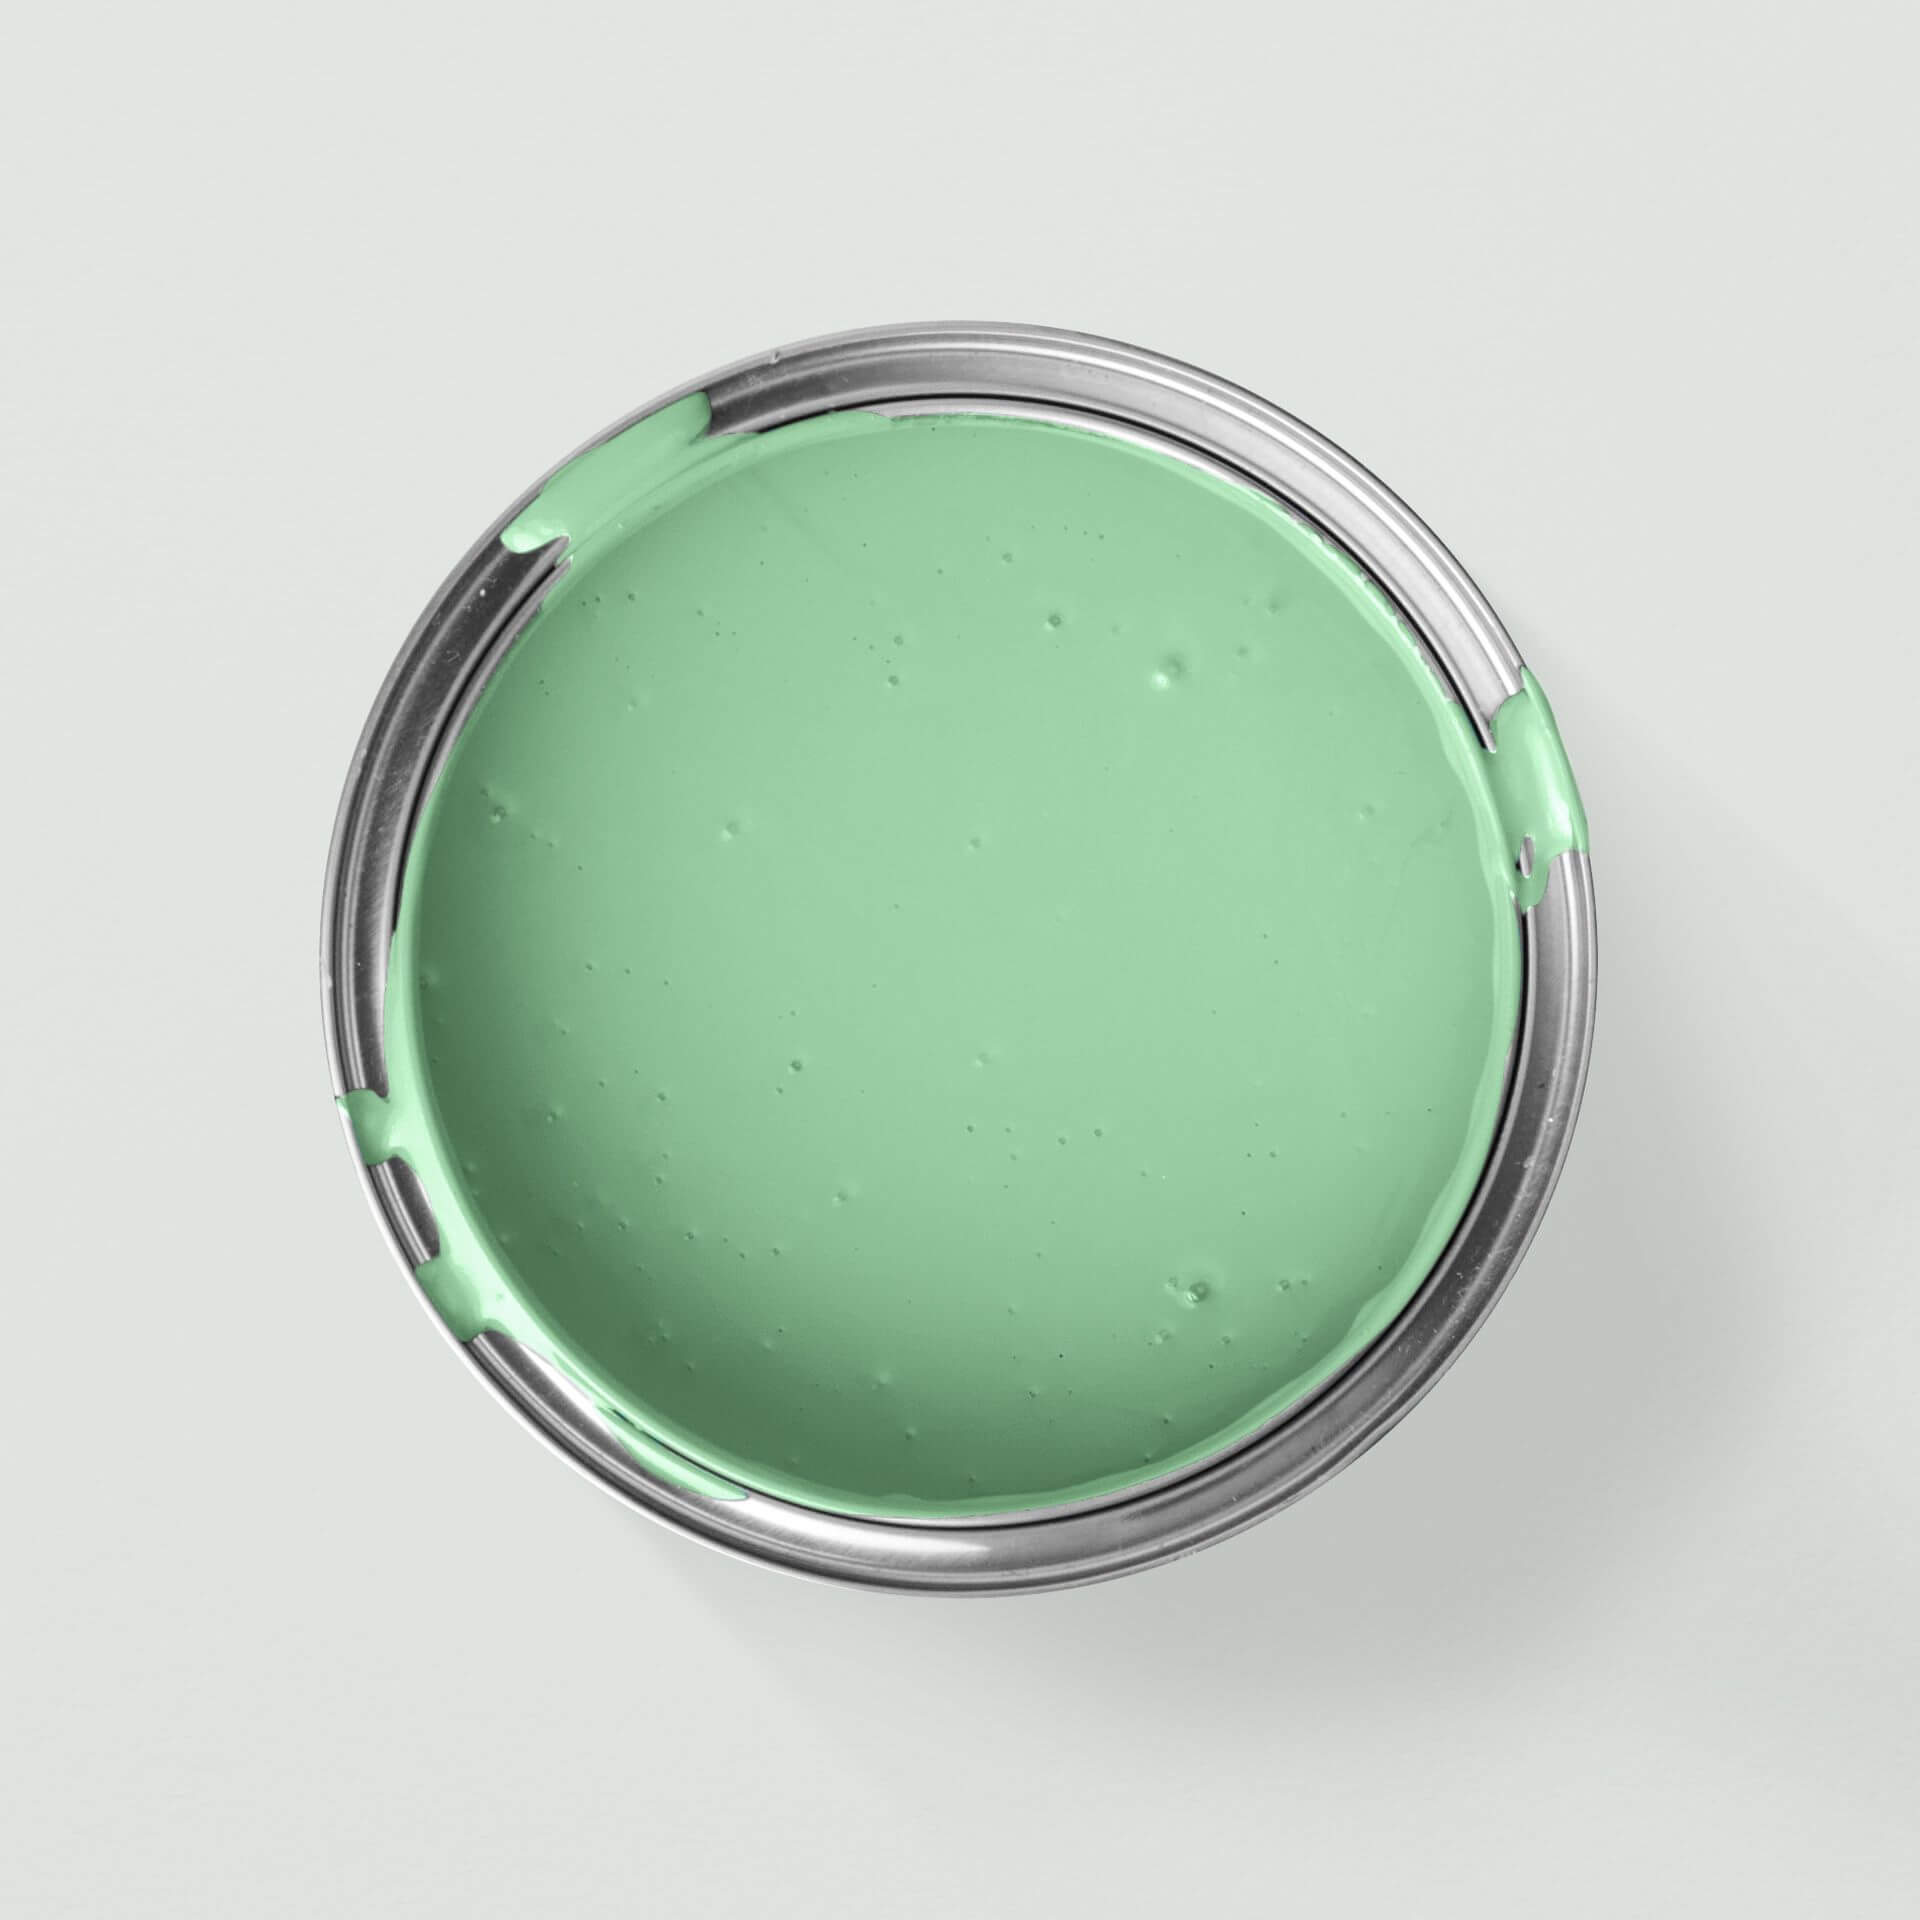 MissPompadour Green with Mint - Eggshell Varnish 1L